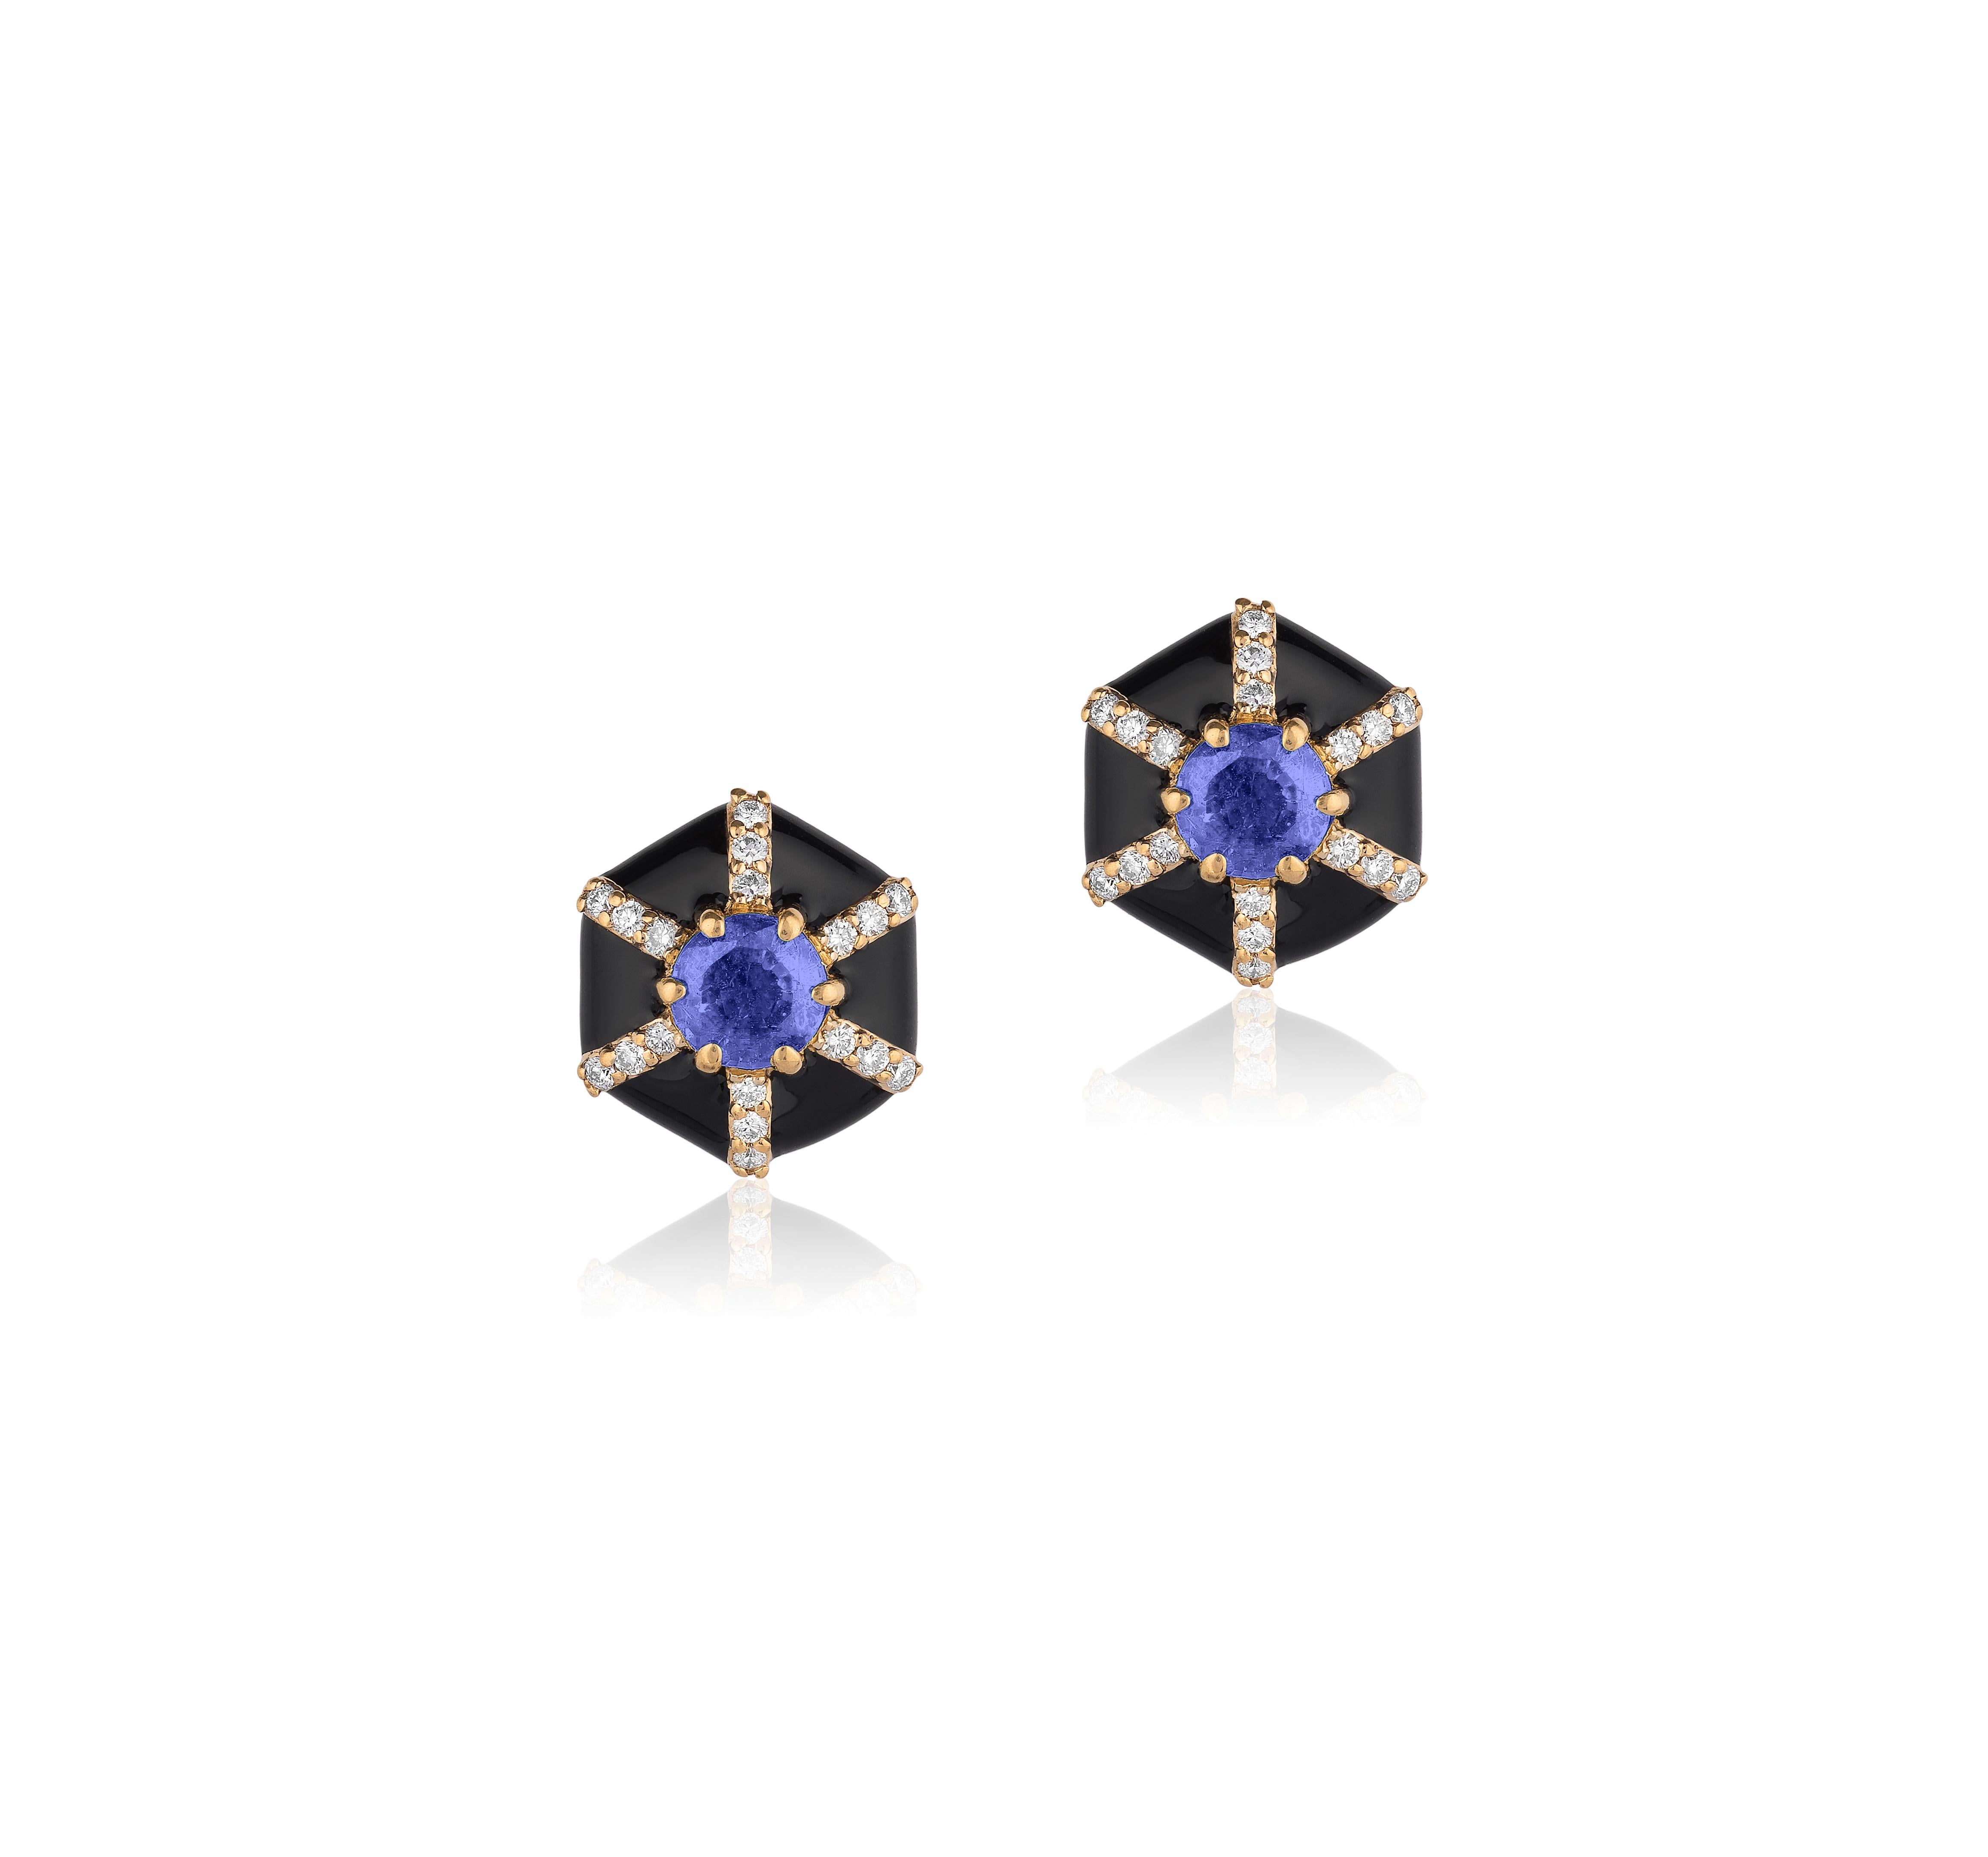 Contemporary Goshwara Hexagon Shape Black Enamel with Sapphire and Diamonds Stud Earrings